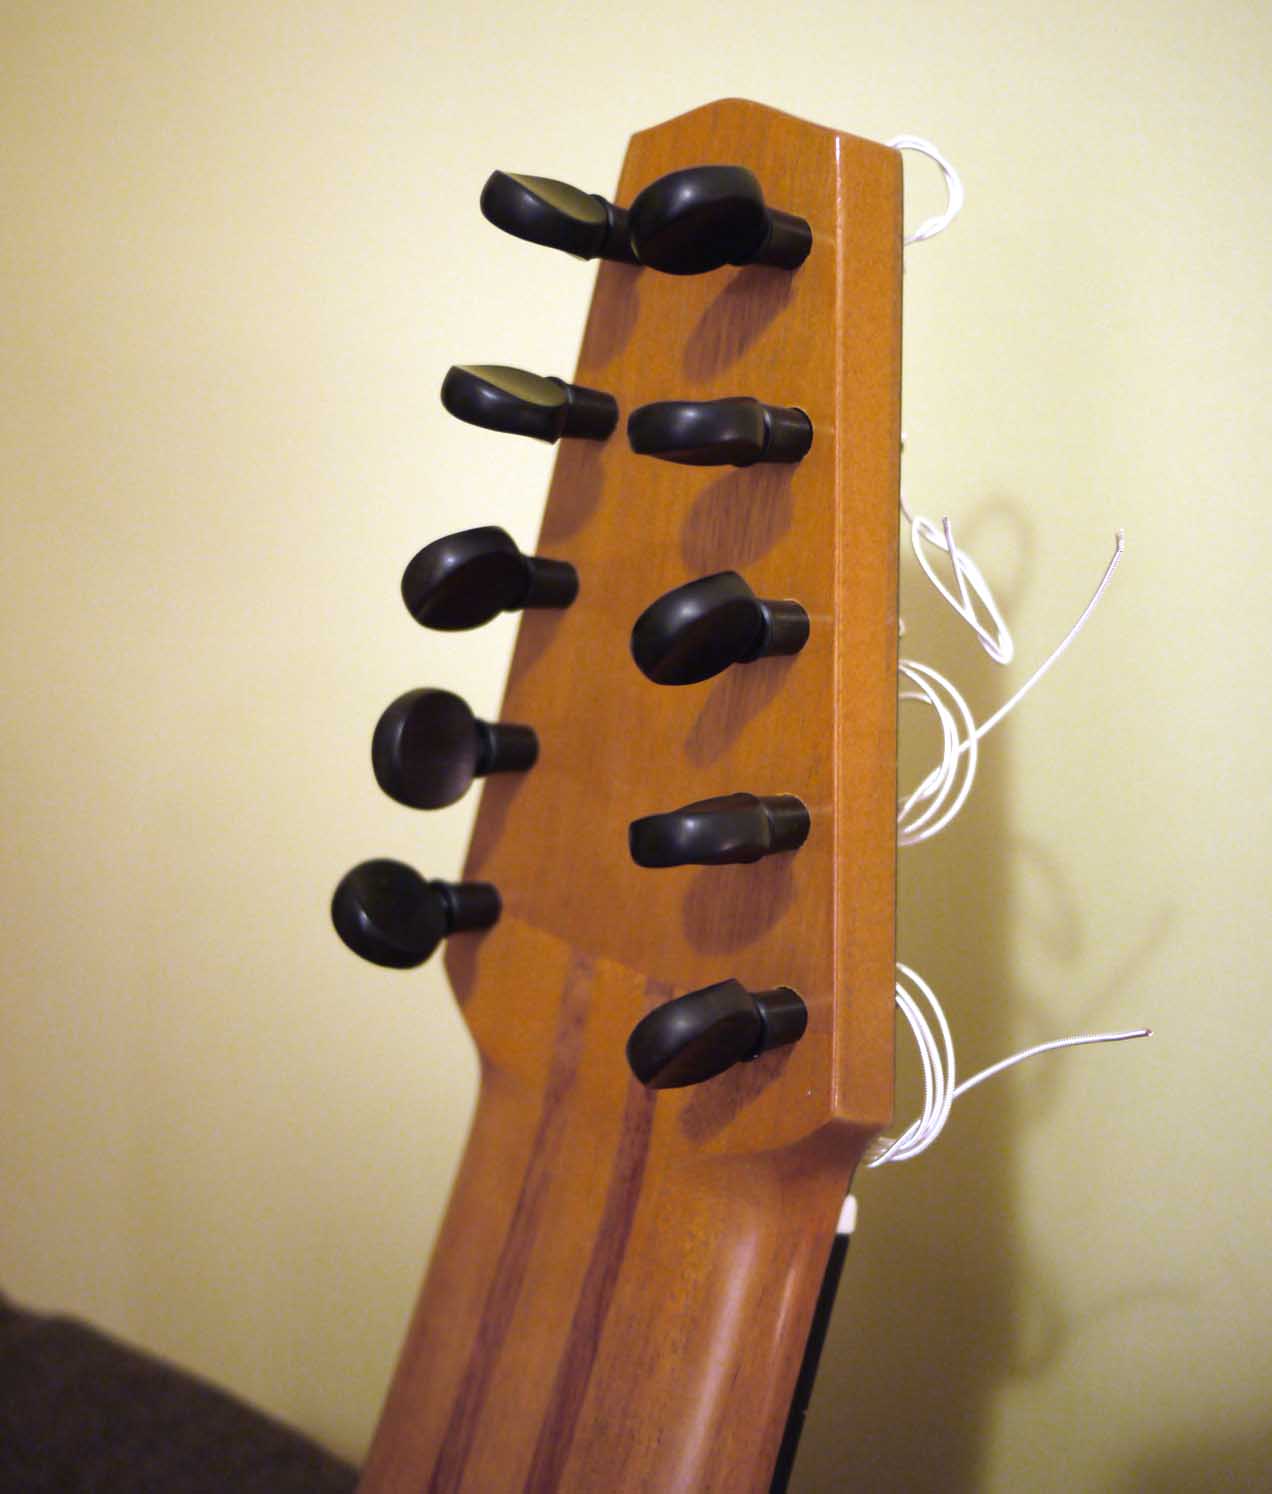 10-String Alto Guitar, by Ed Rusnak, Montreal, Canada